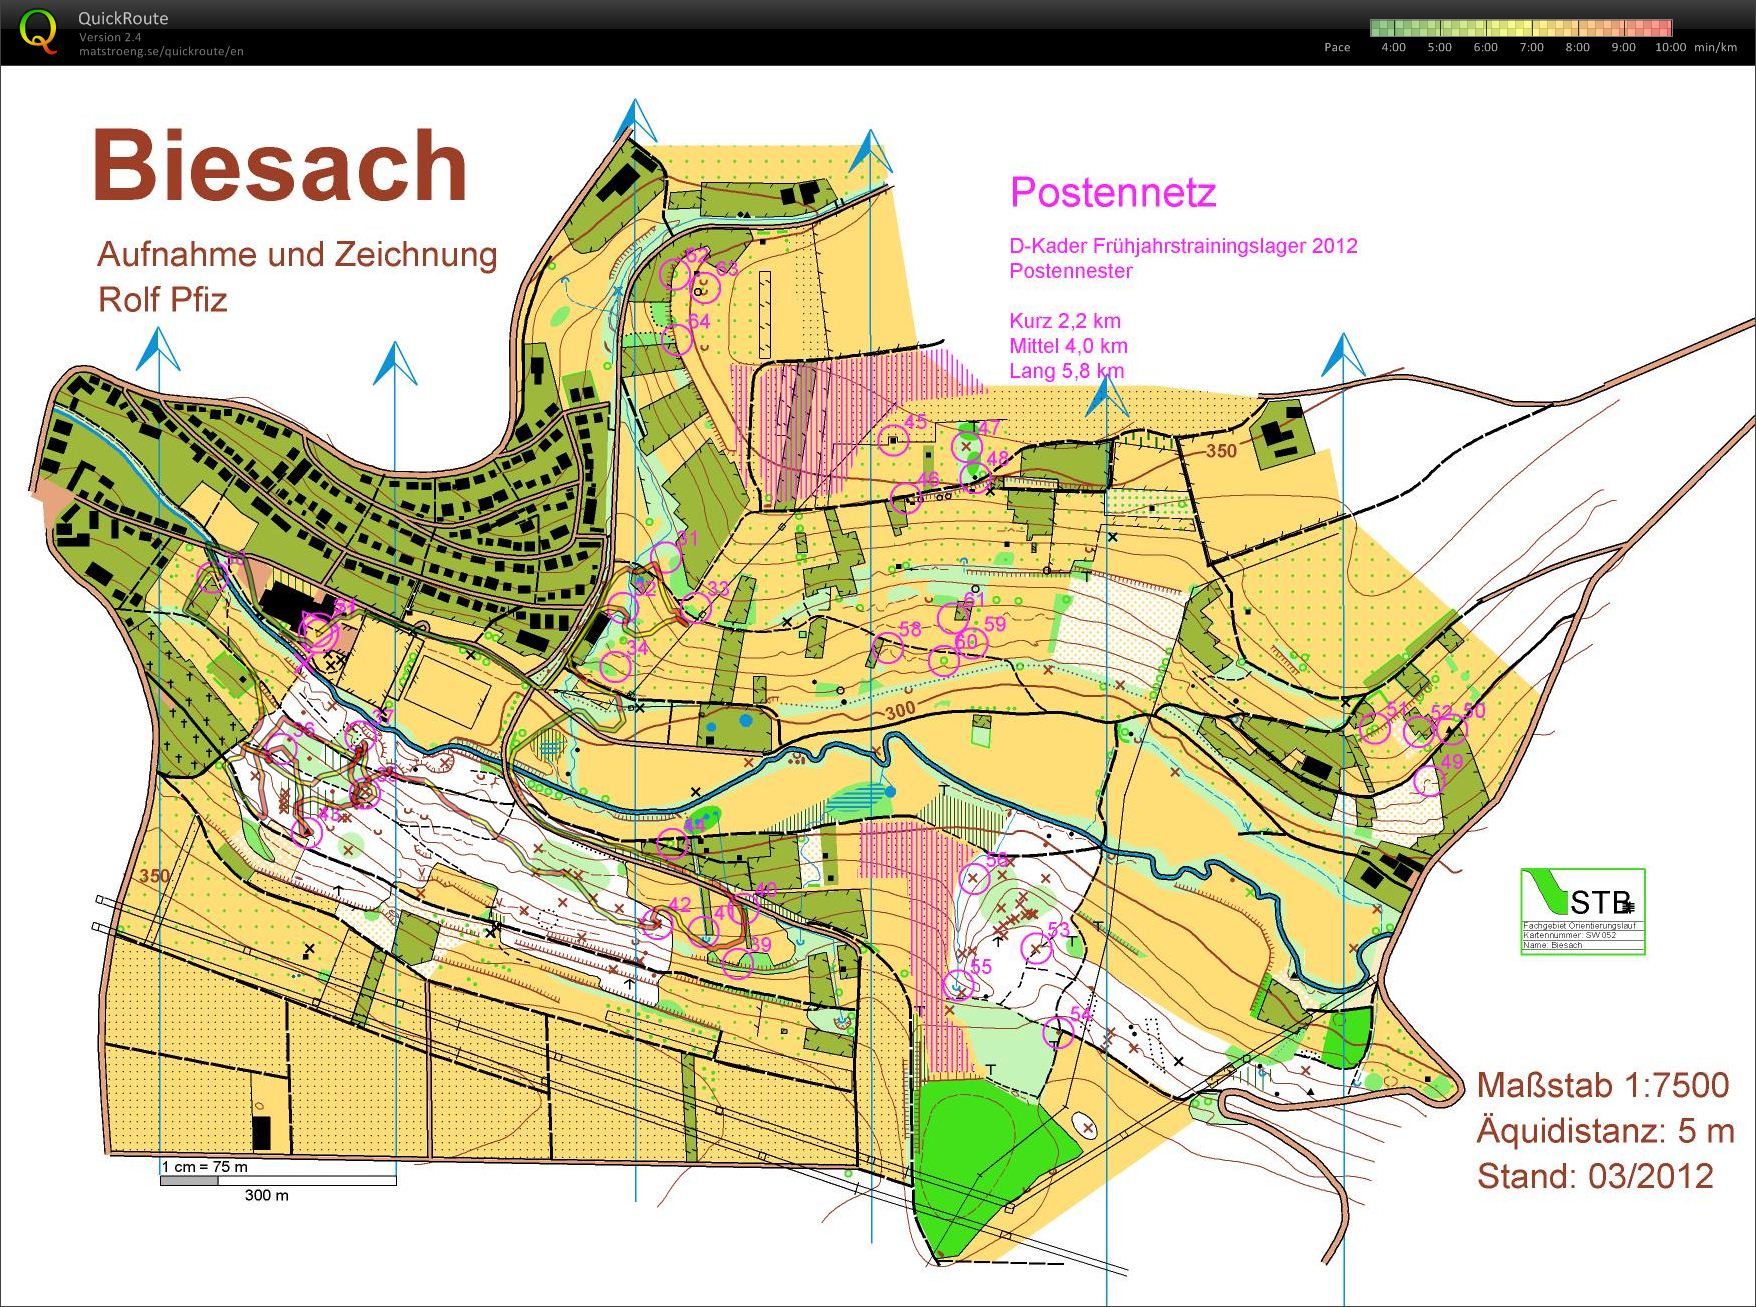 Training Biesach (Schatten) (24-03-2012)